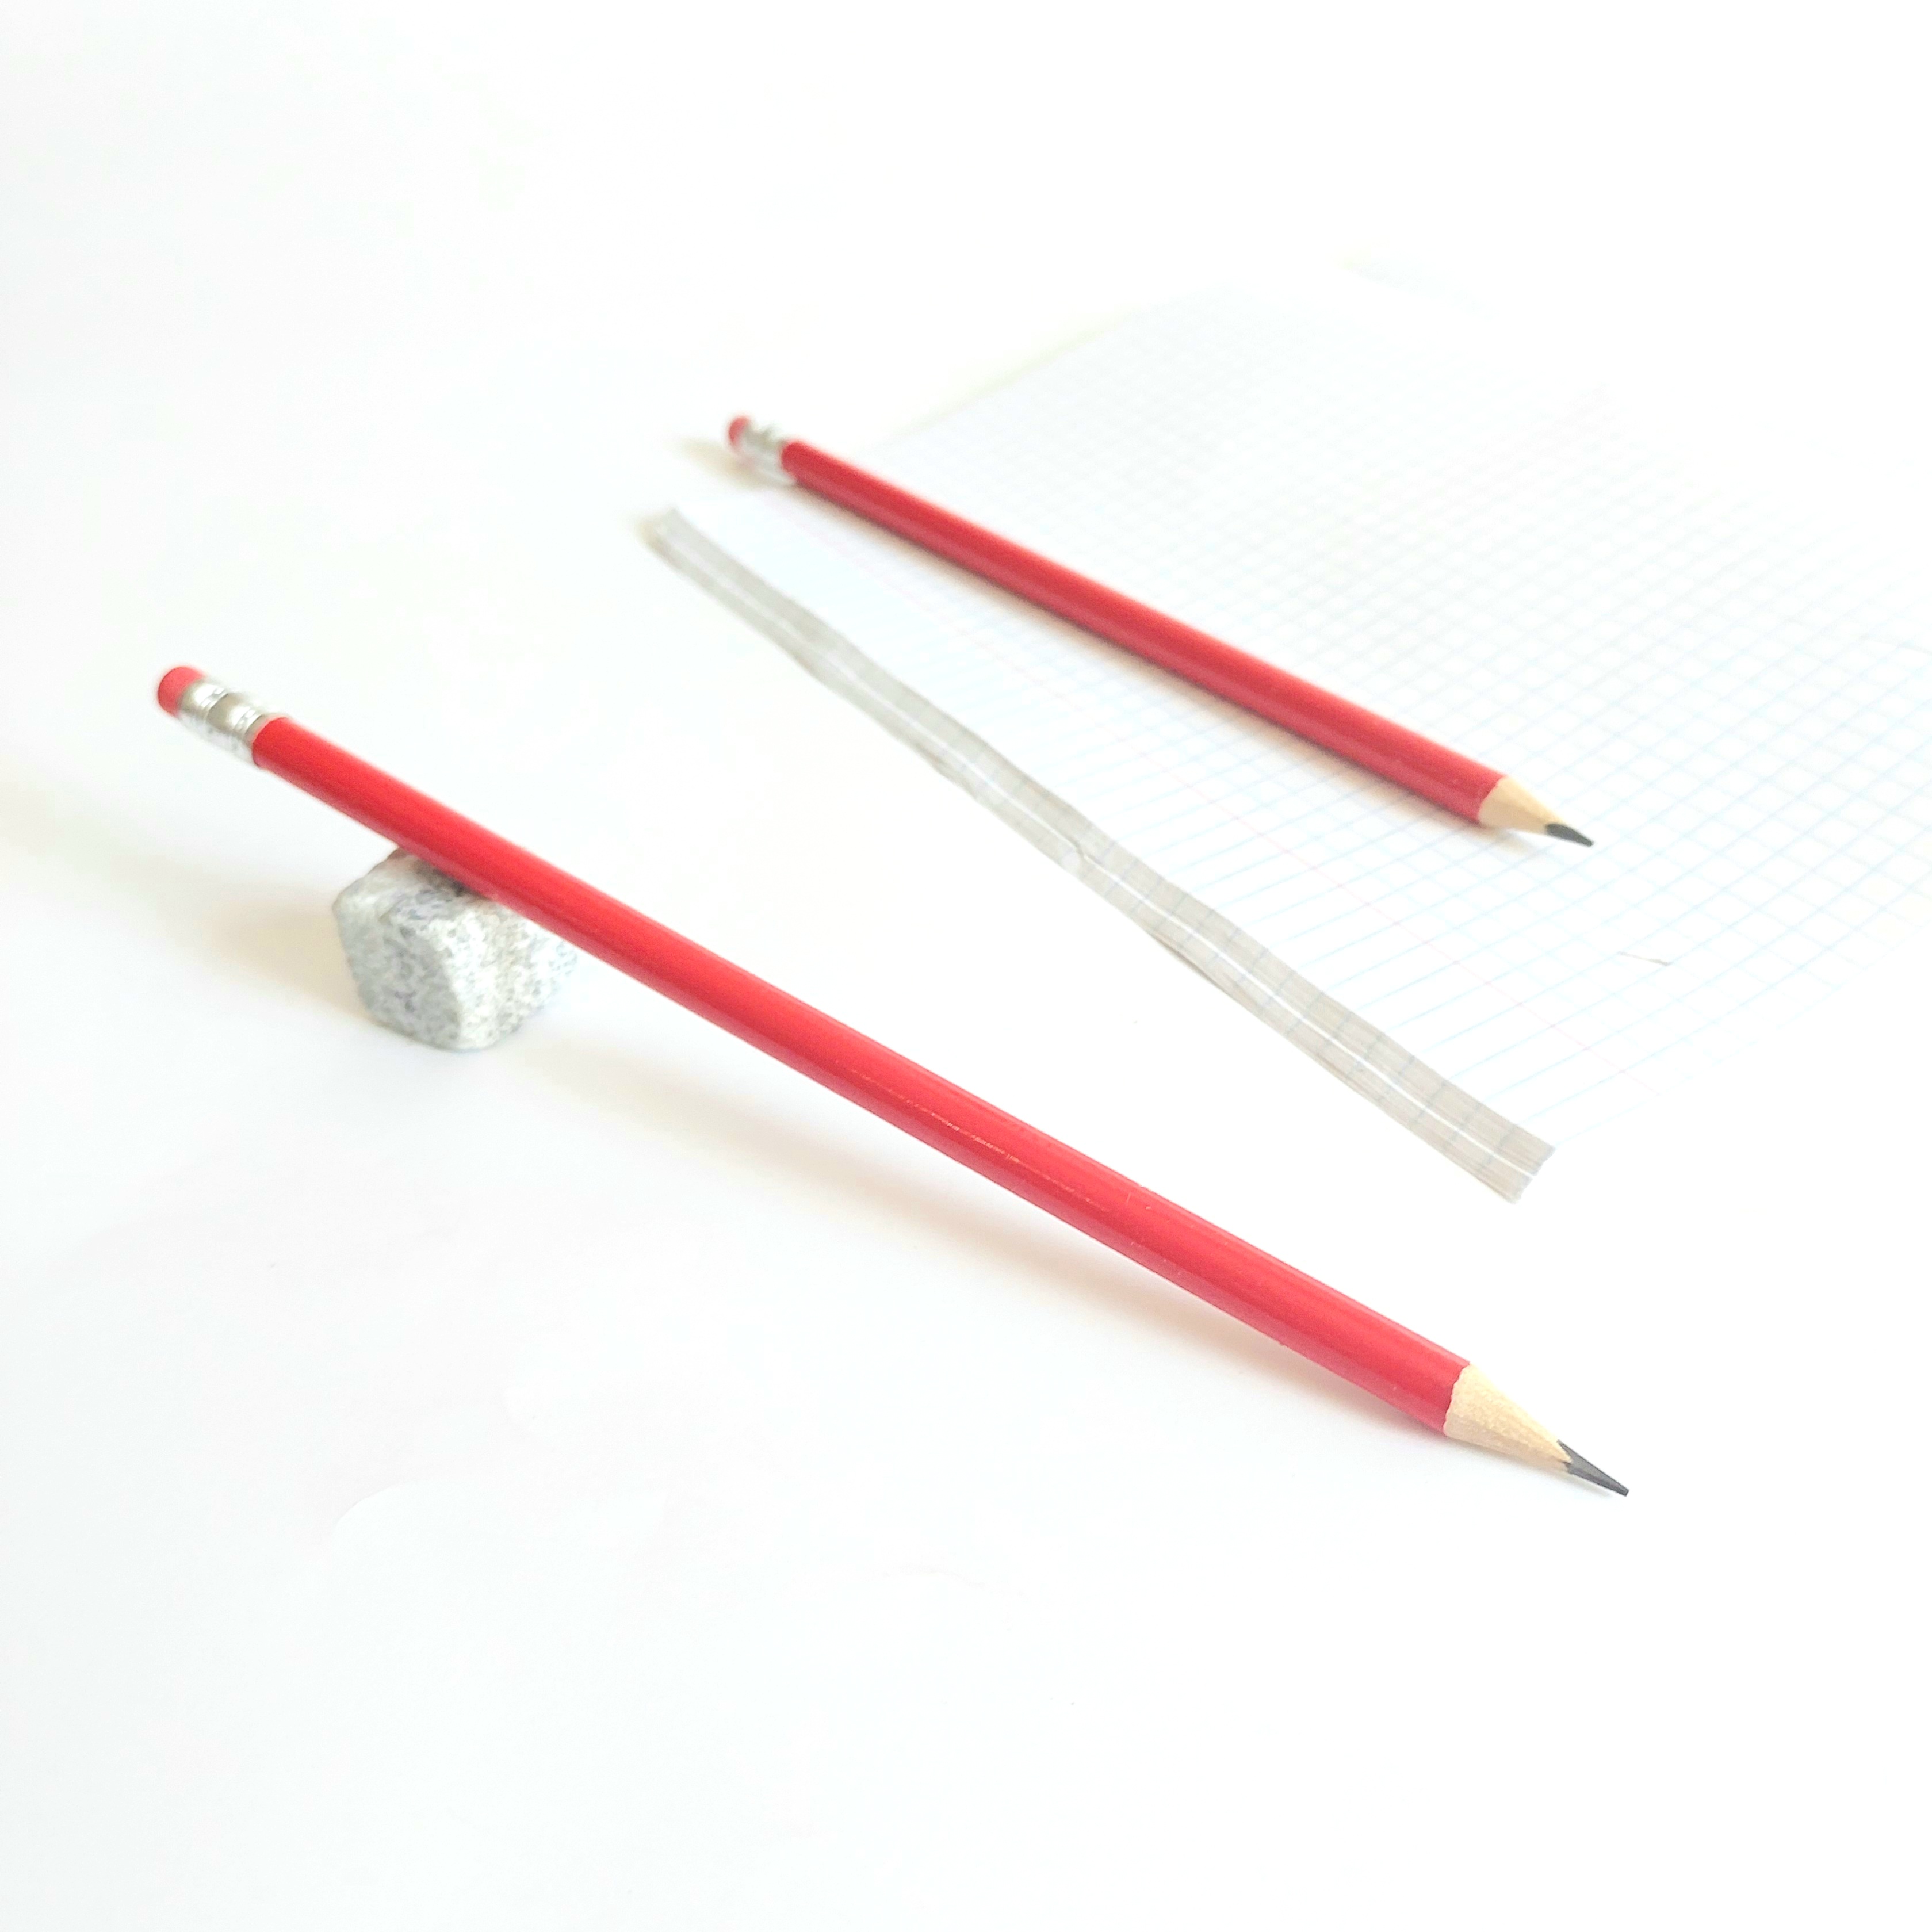 карандаши с логотипом